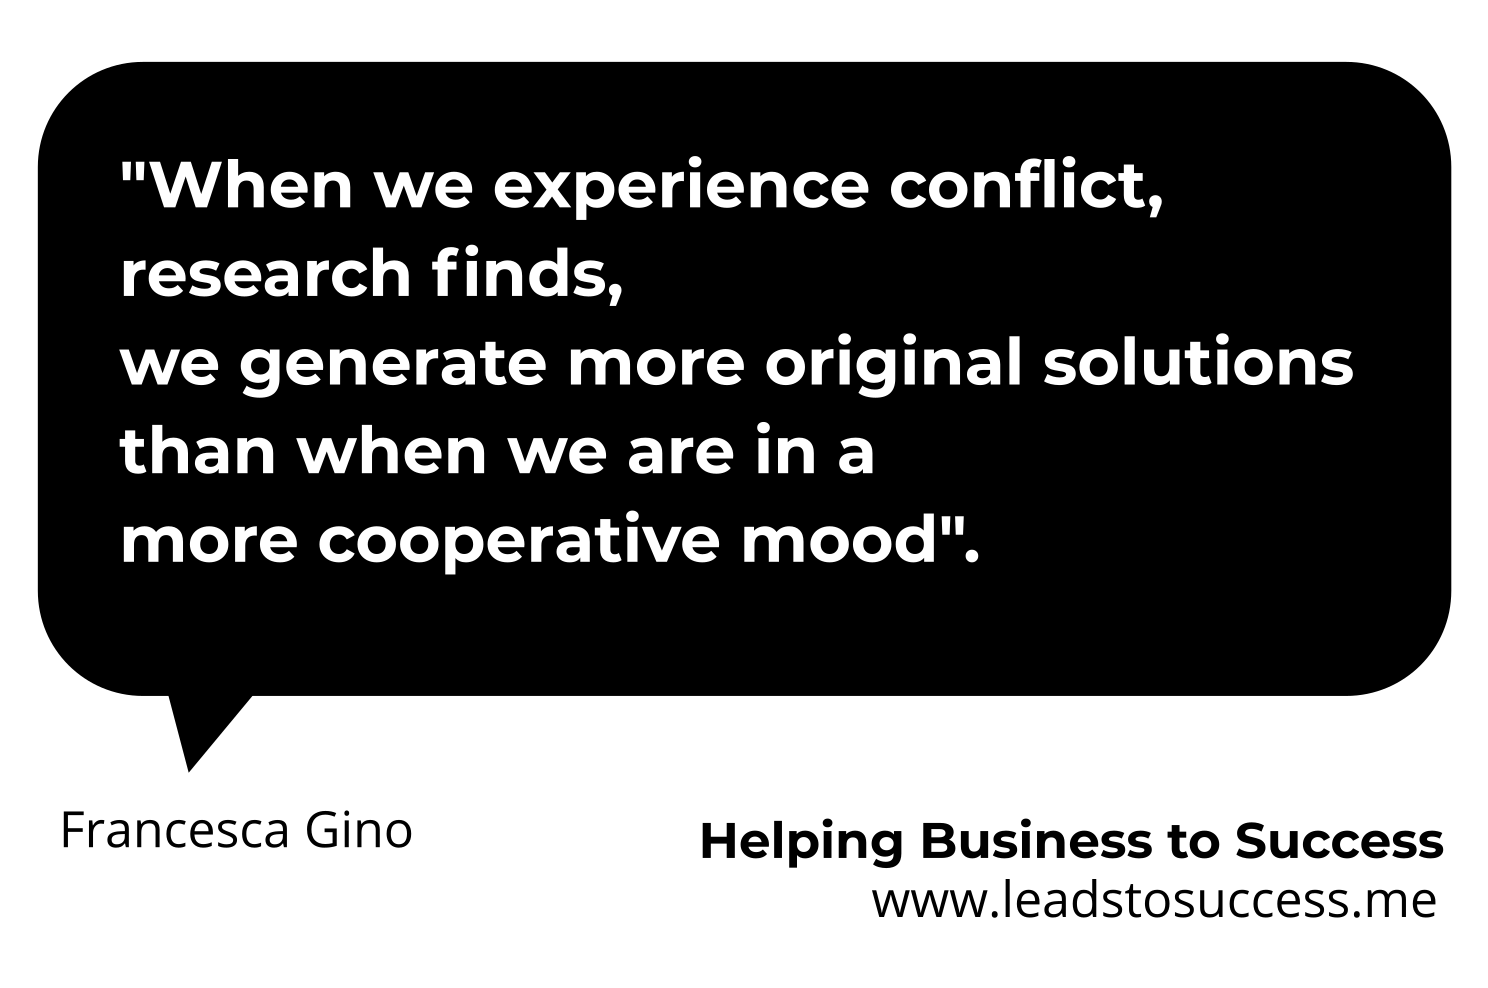 conflict helps creativity